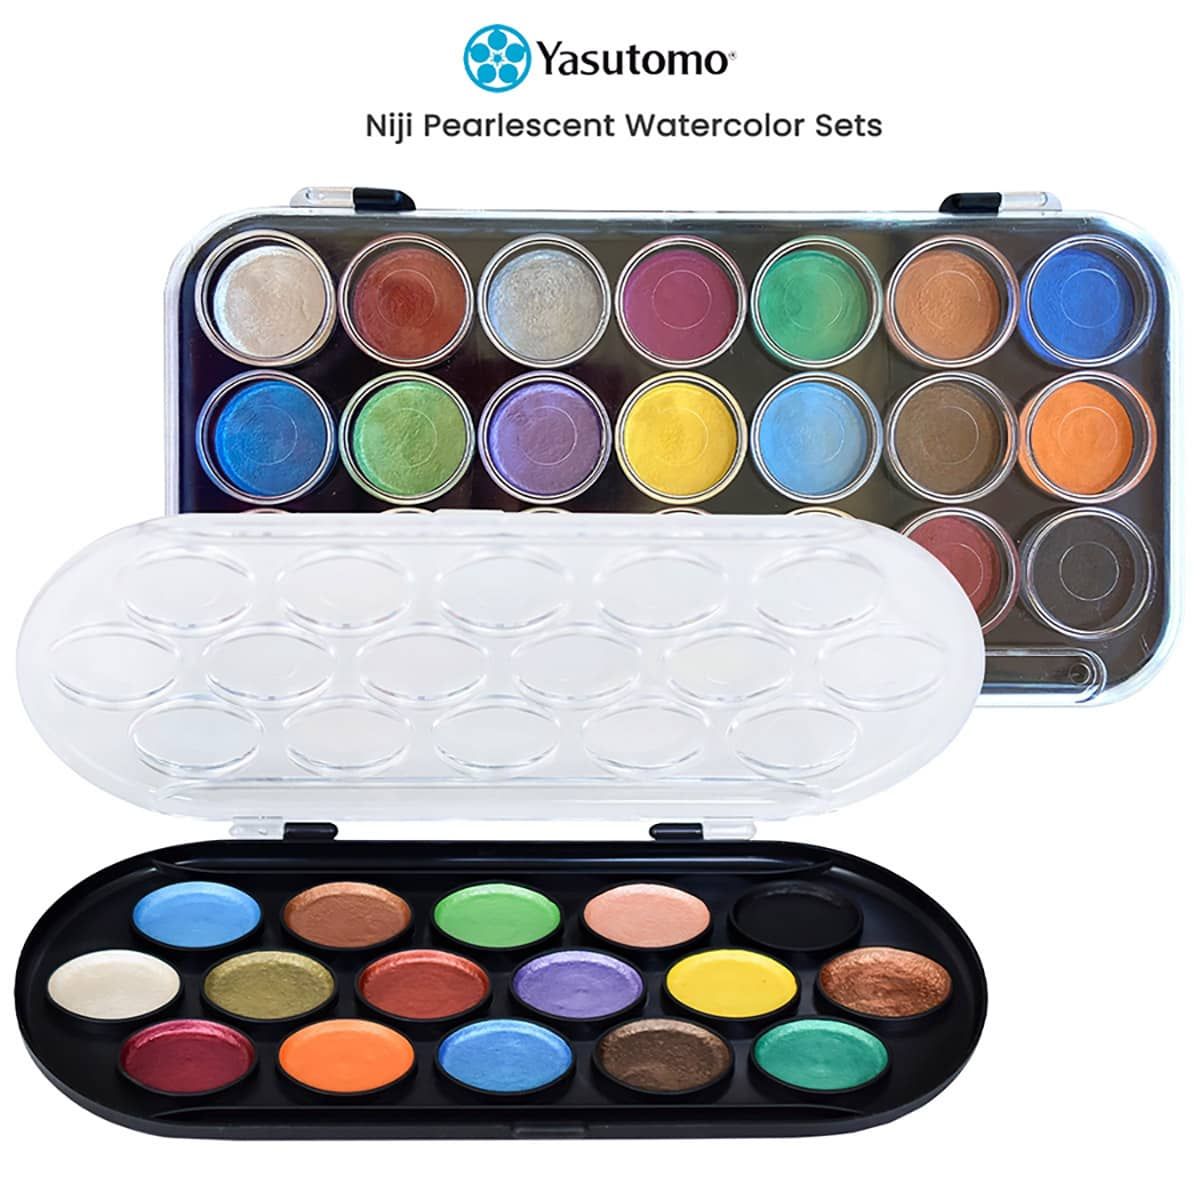 https://www.jerrysartarama.com/media/catalog/product/cache/ecb49a32eeb5603594b082bd5fe65733/y/a/yasutomo-pearlescent-watercolor-sets-main.jpg